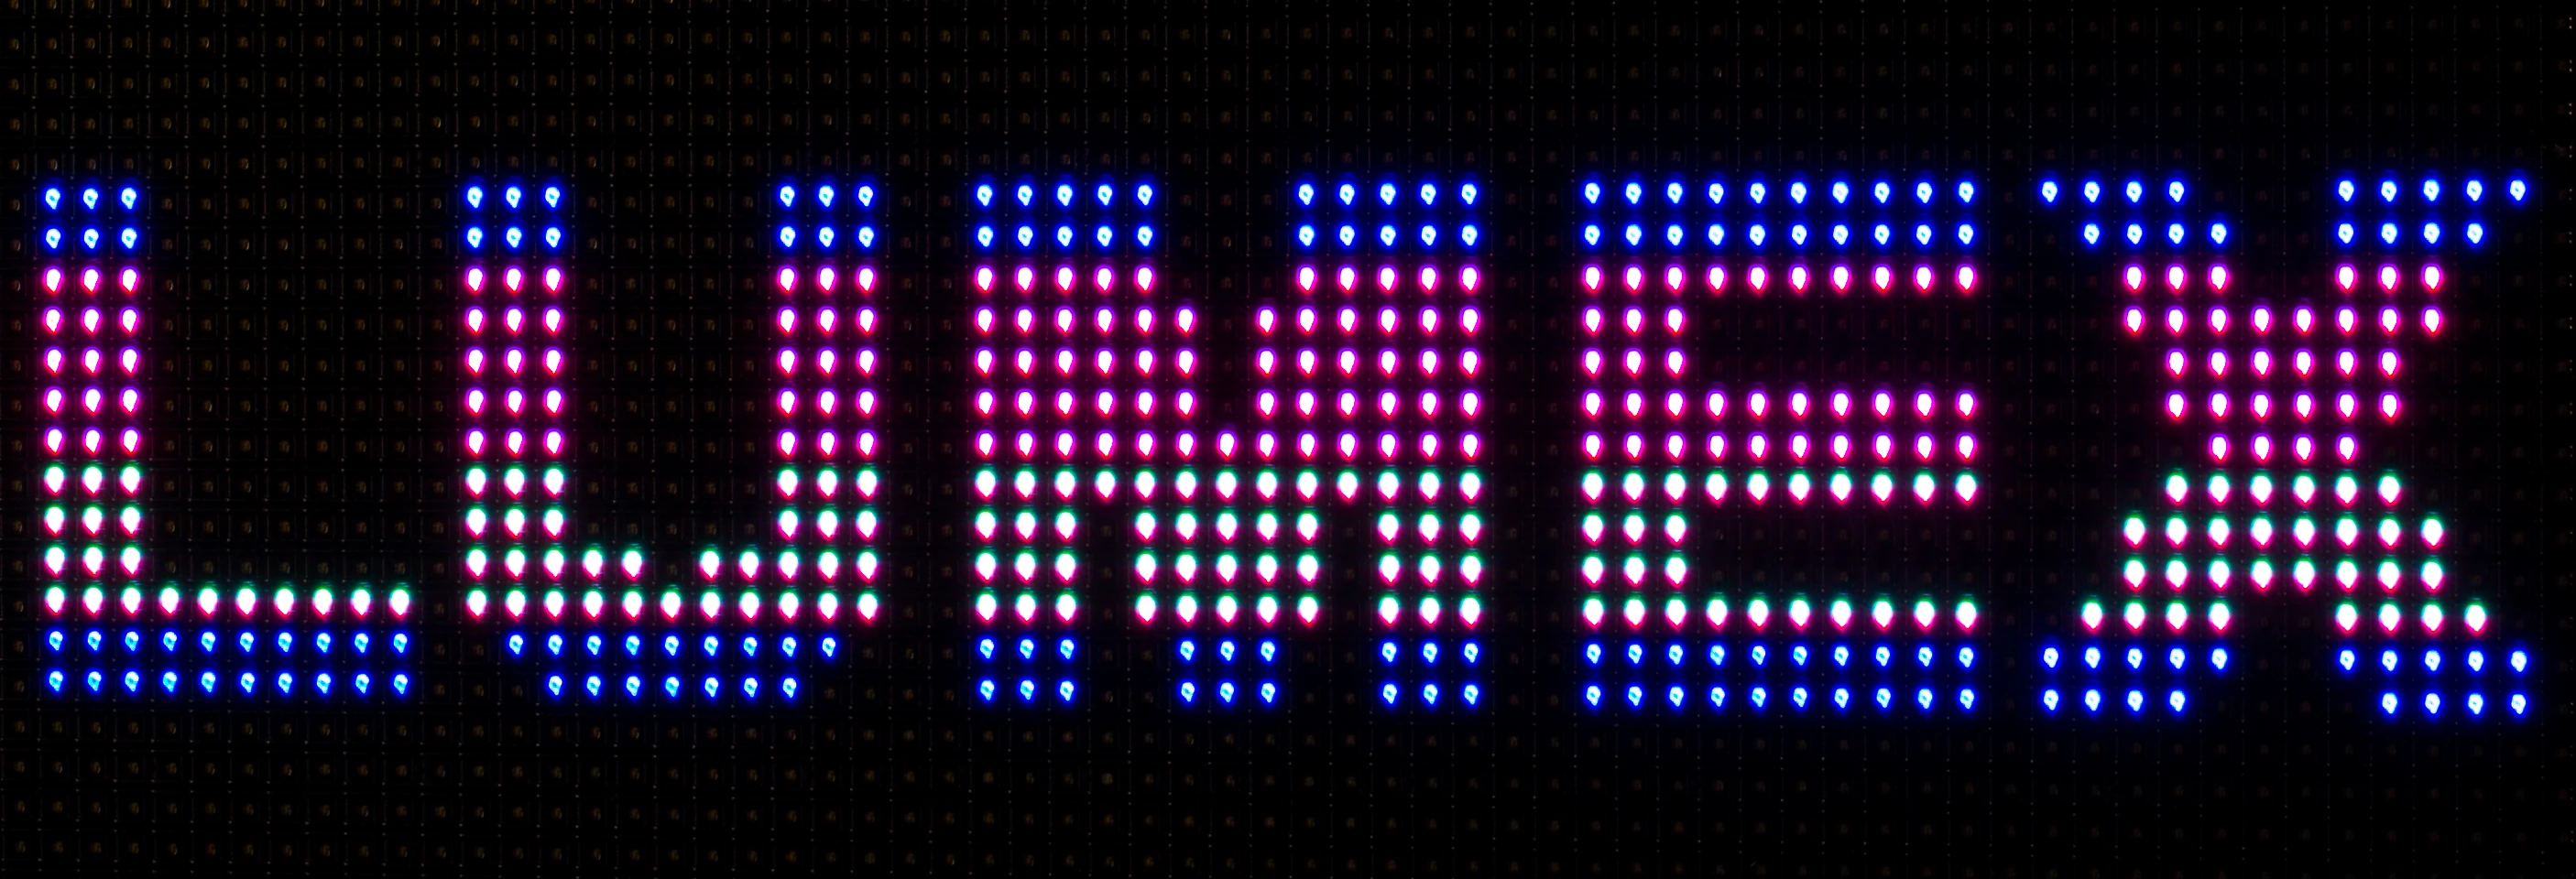 RGB LED Dot Matrix Display - Programmable